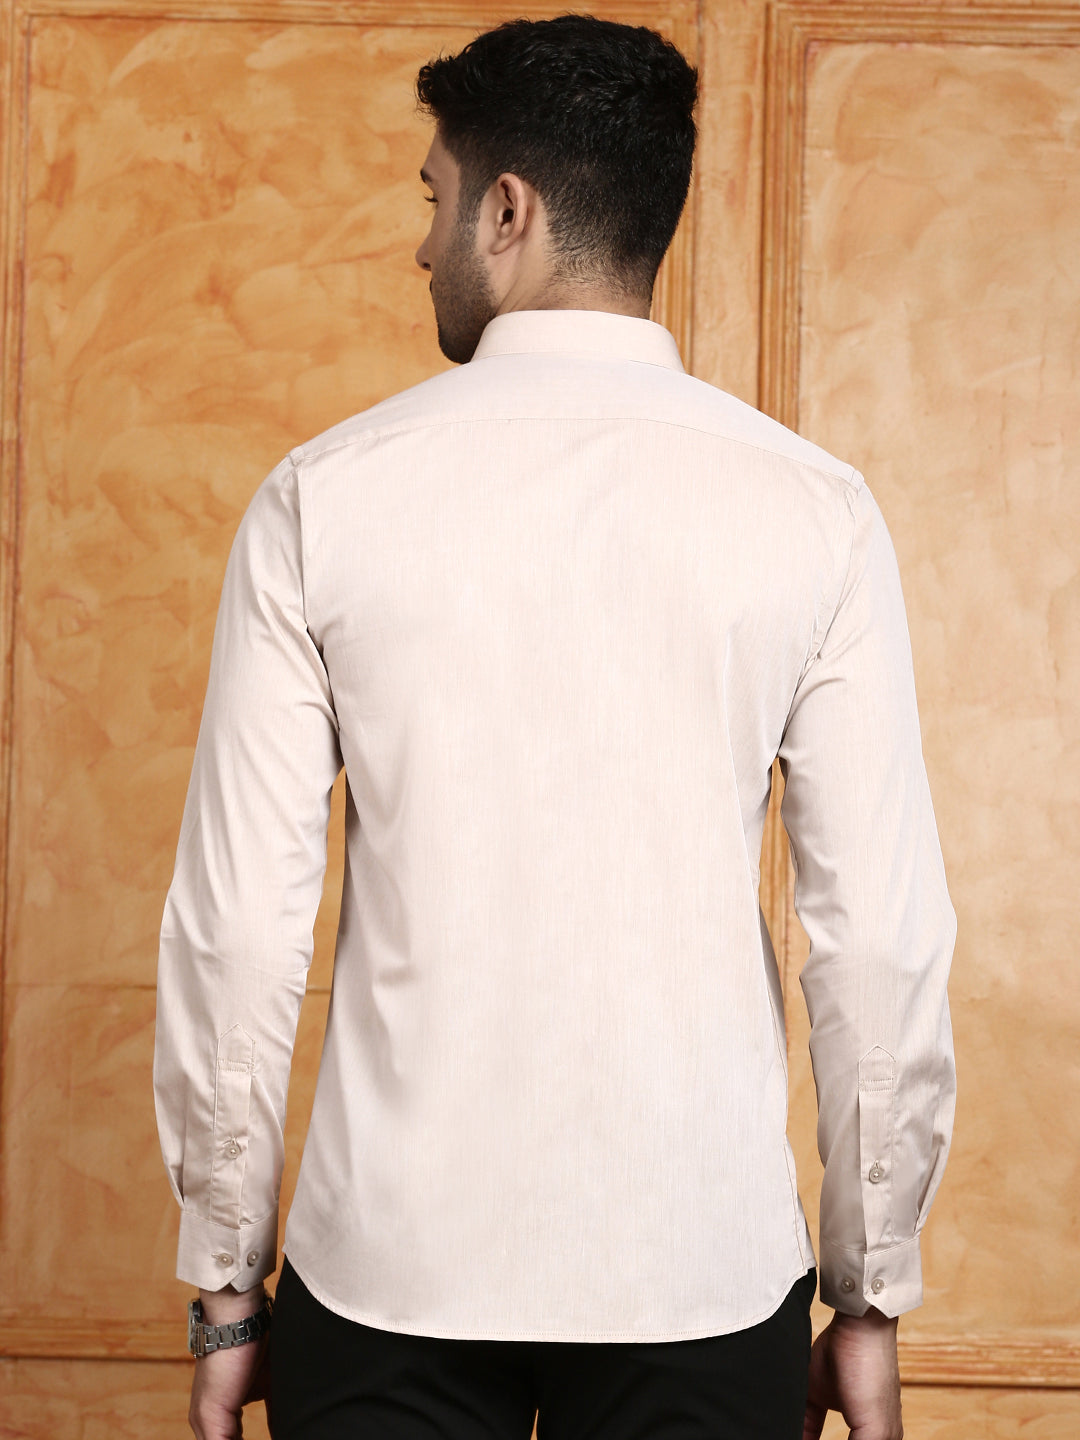 Mens Premium Cotton Formal Shirt Light Brown MH (G113)